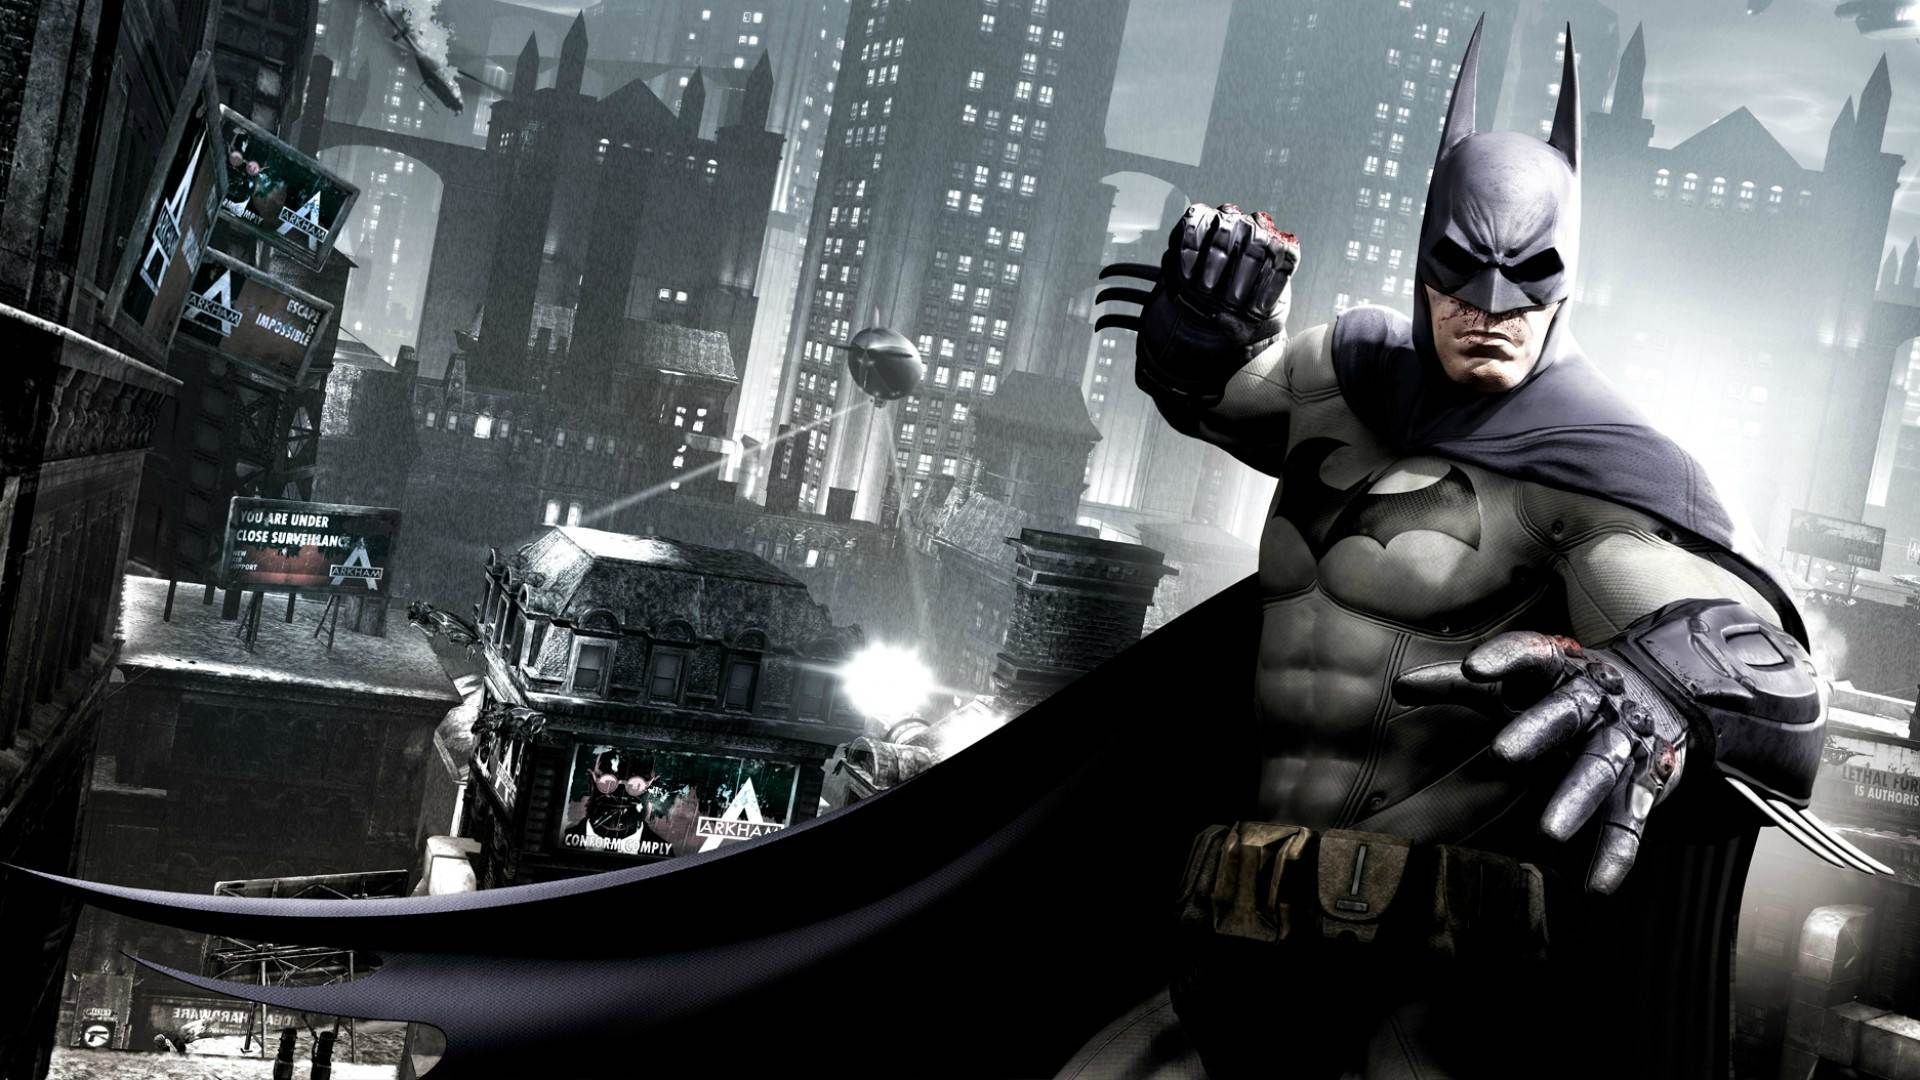 batman wallpaper,batman,action adventure game,superhero,fictional character,justice league